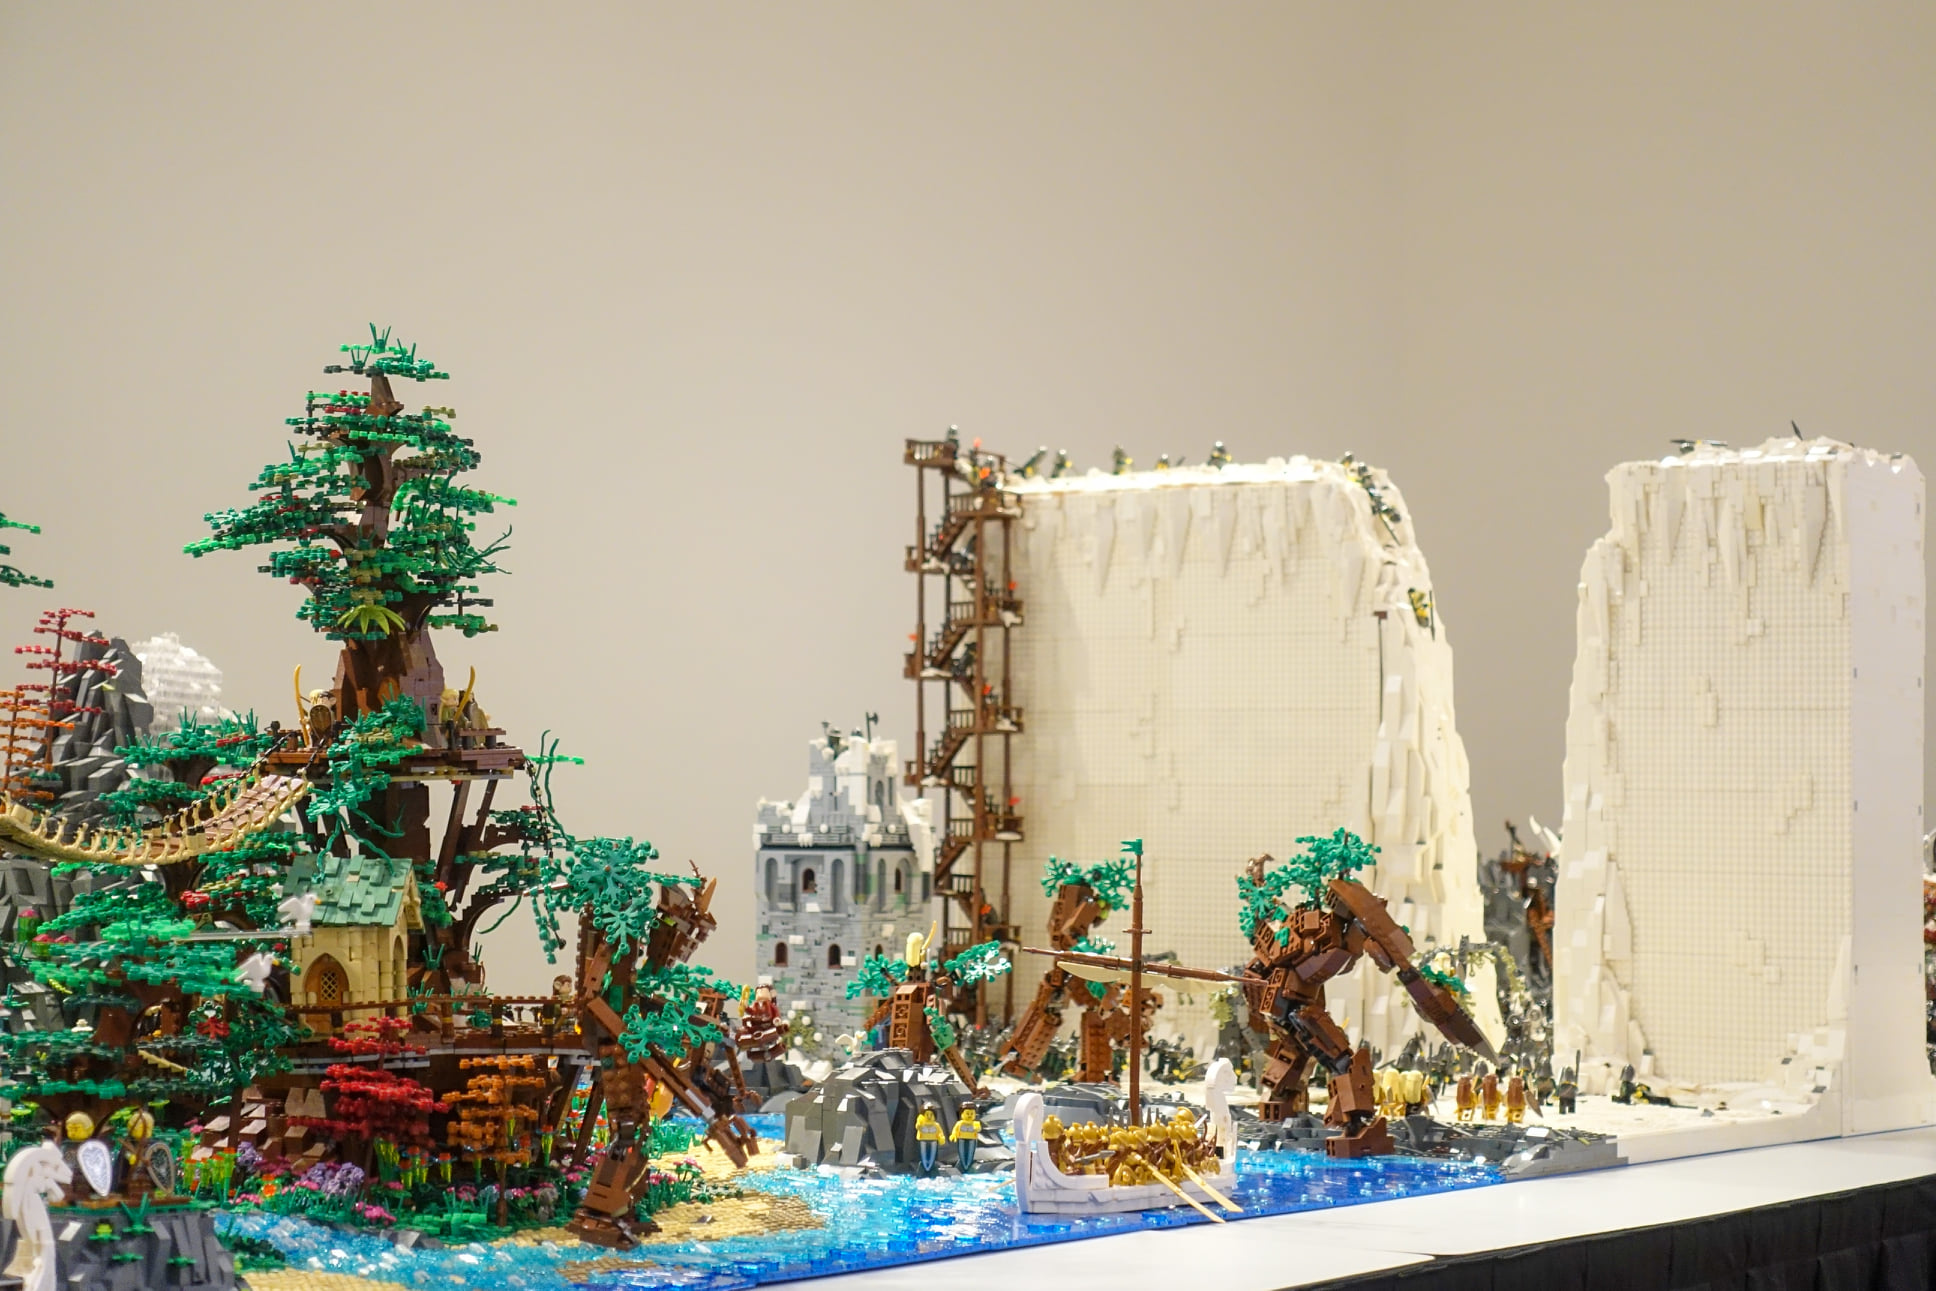 Lego Exhibition Singapore Brickfest 2021